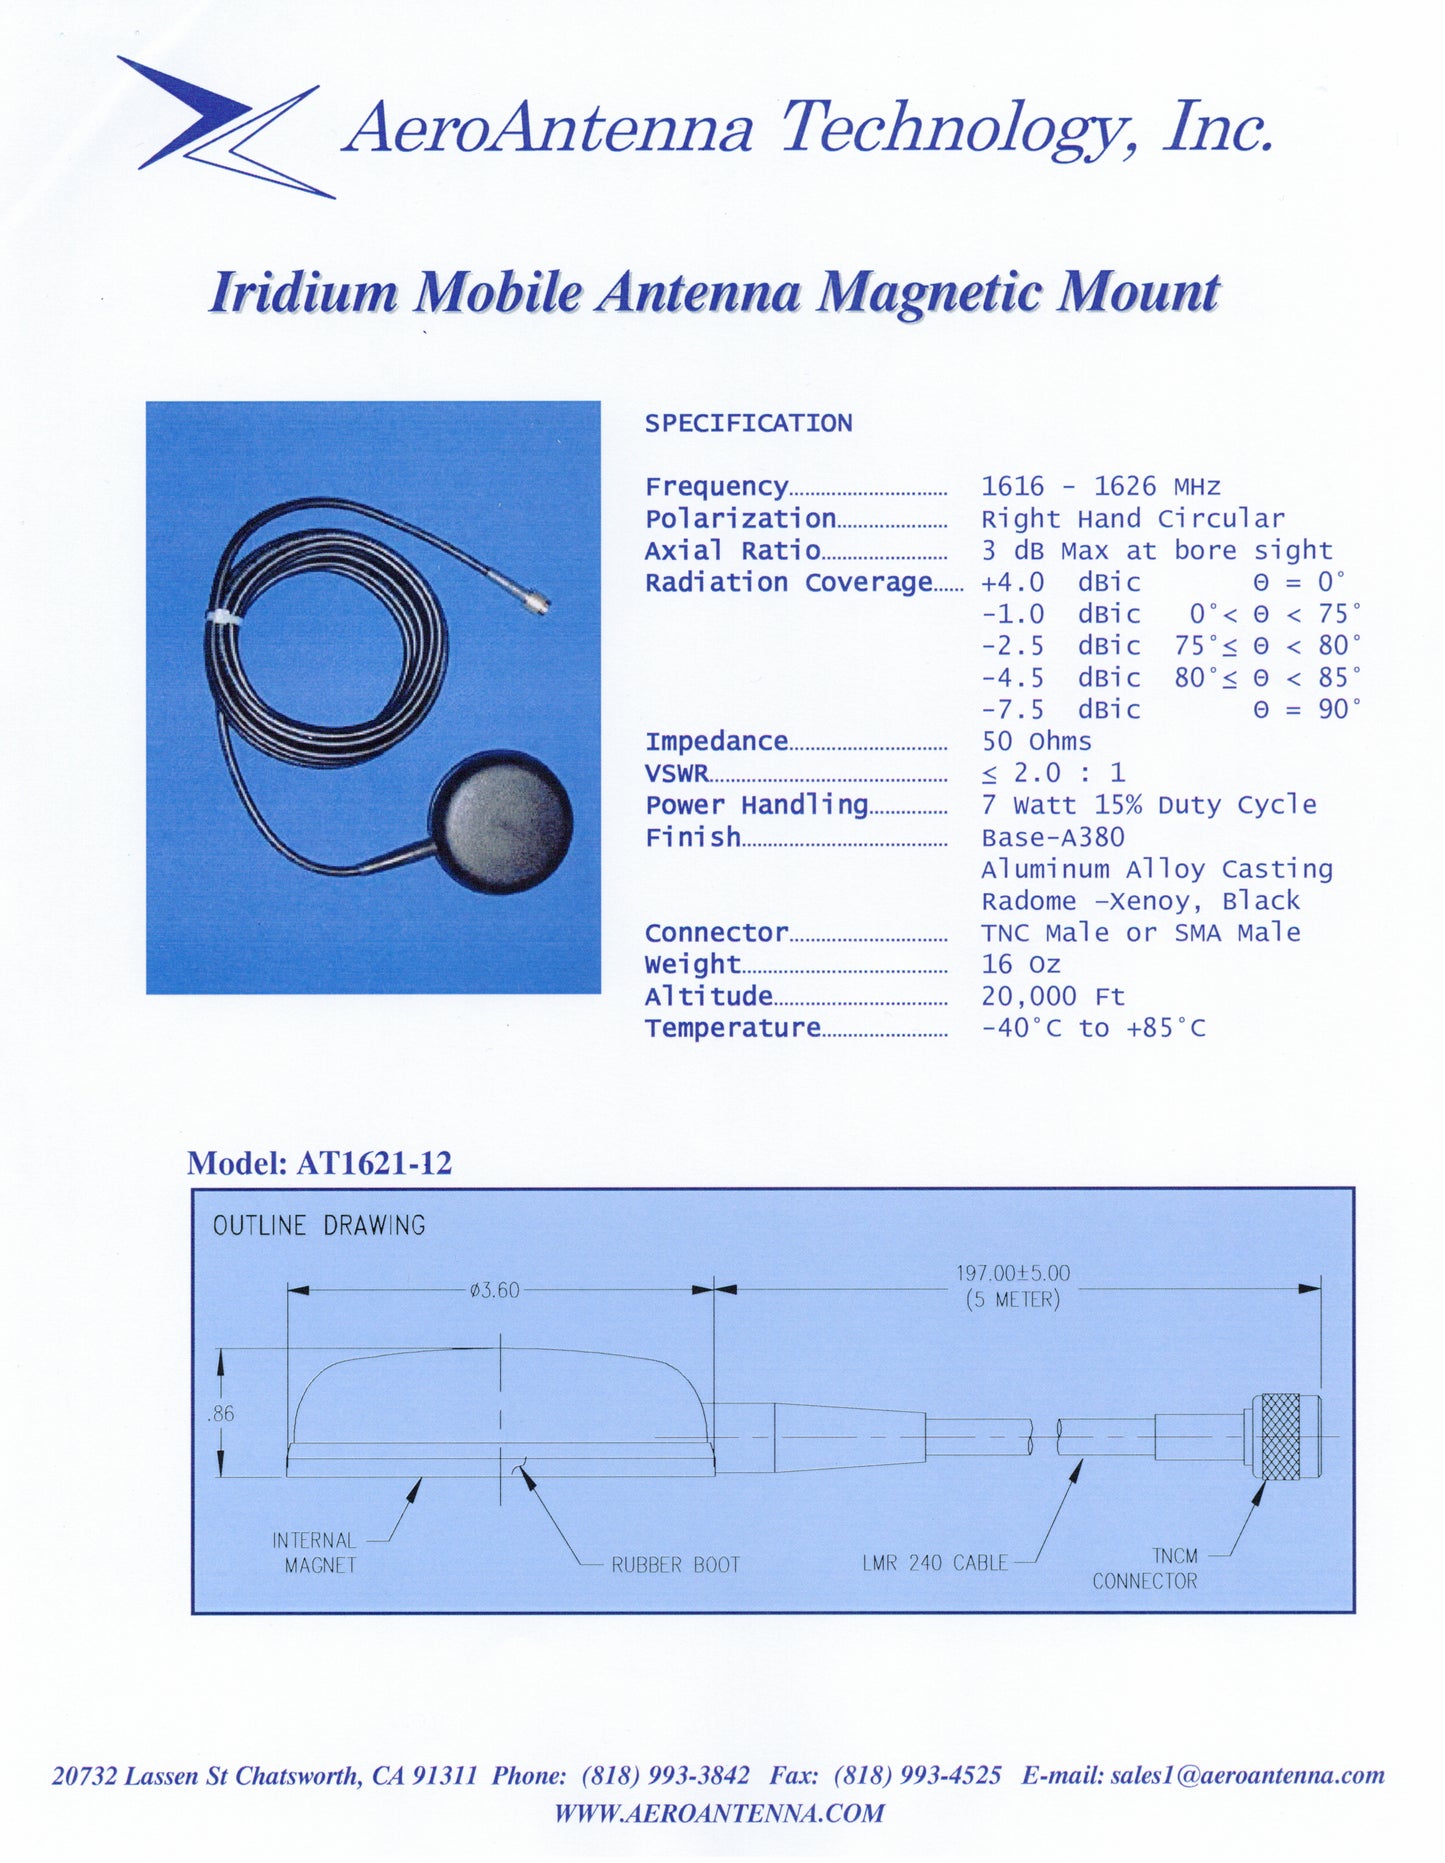 Iridium Mobile Antenna - Magnet Mount Antenna